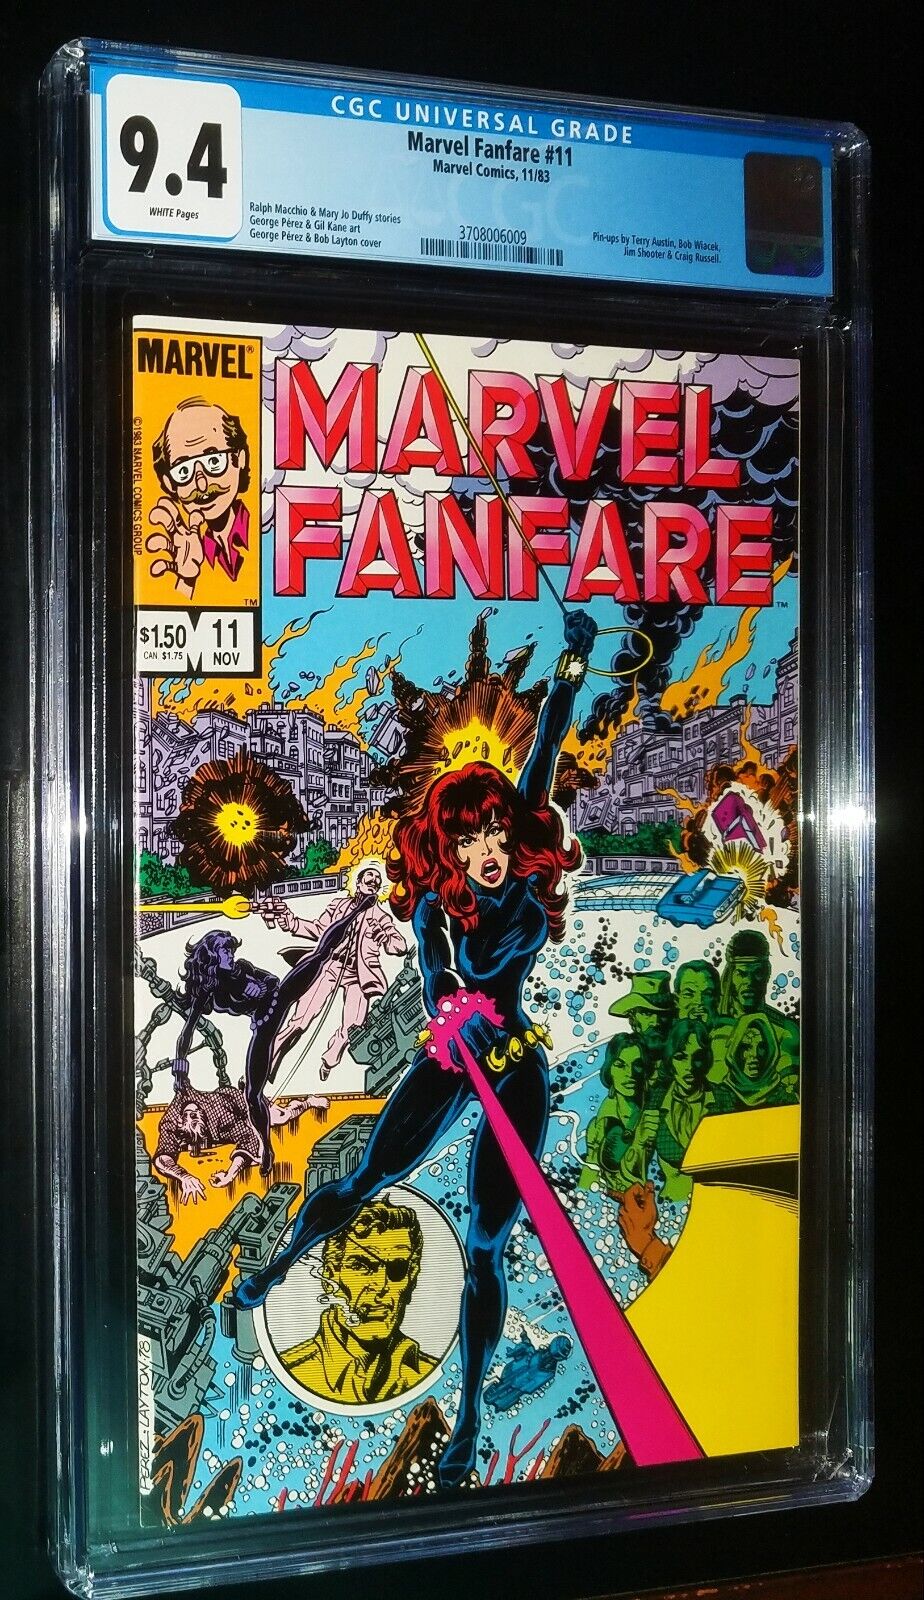 MARVEL FANFARE CGC #11 1983 Marvel Comics CGC 9.4 NM White Pages 0626